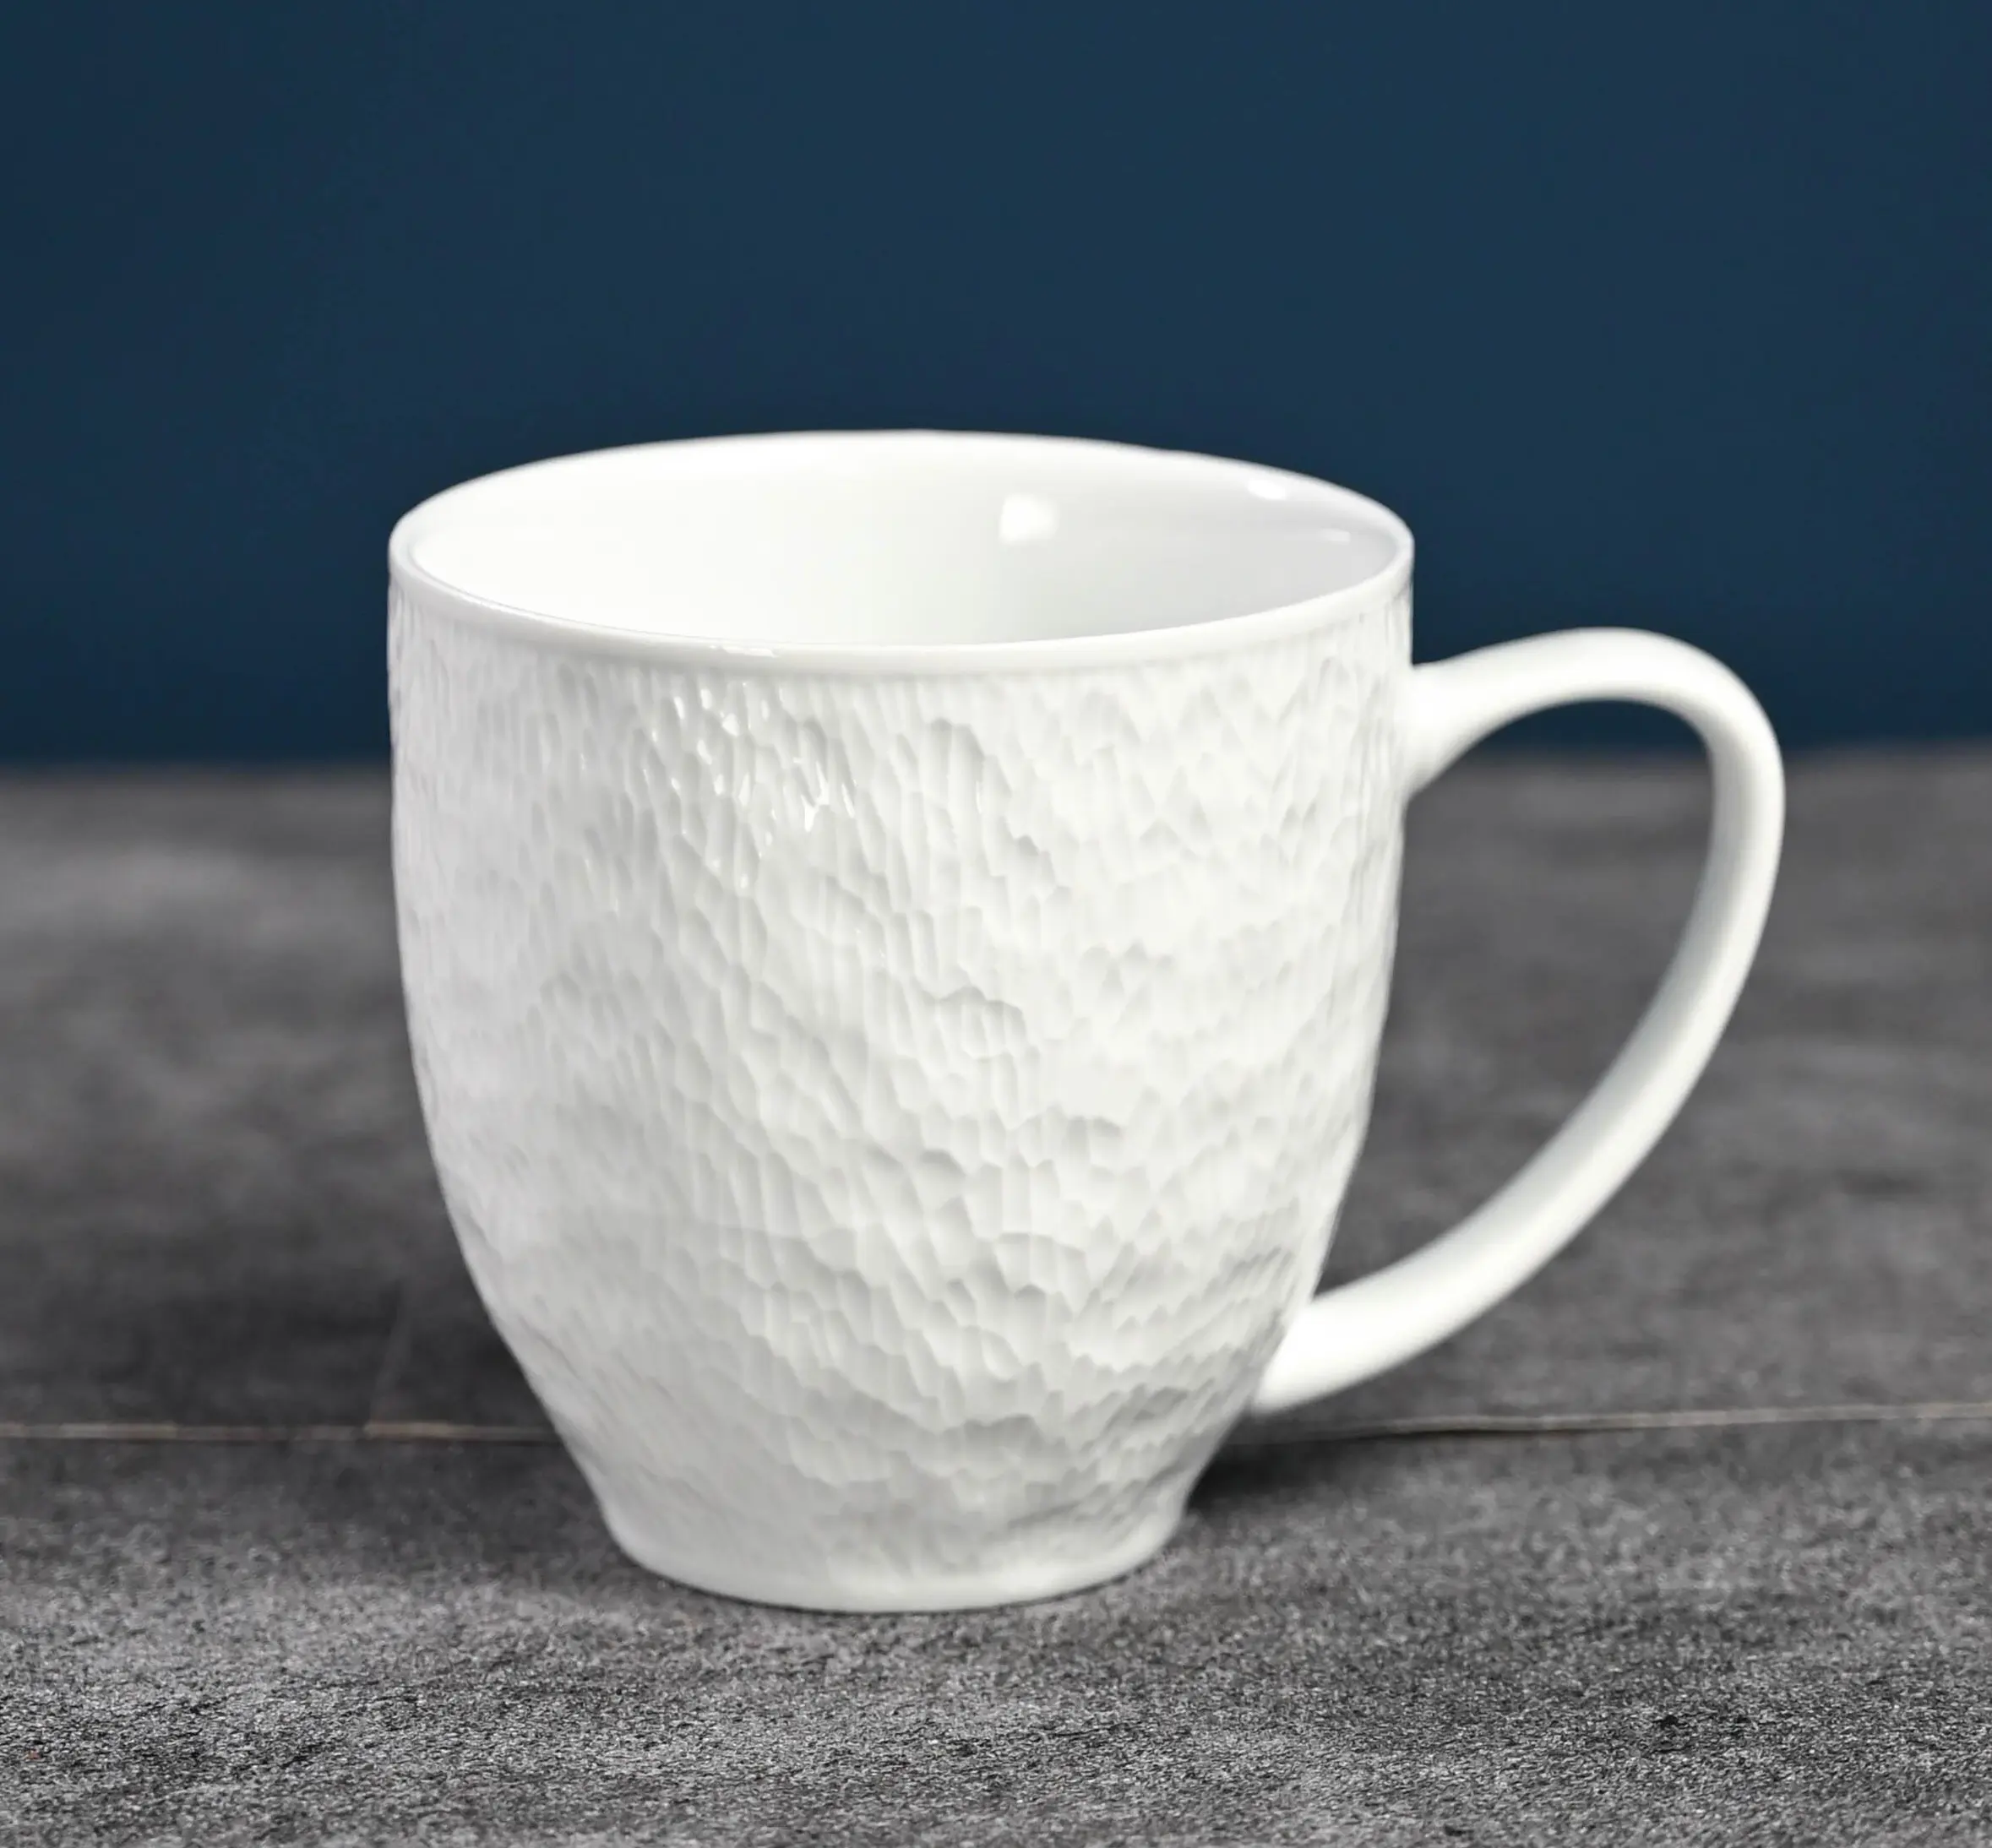 PITO सफेद आधुनिक डिजाइन चीनी मिट्टी के कॉफी मग उभरा हुआ होरेका अनुकूलित मग और कप सिरेमिक कॉफी मग